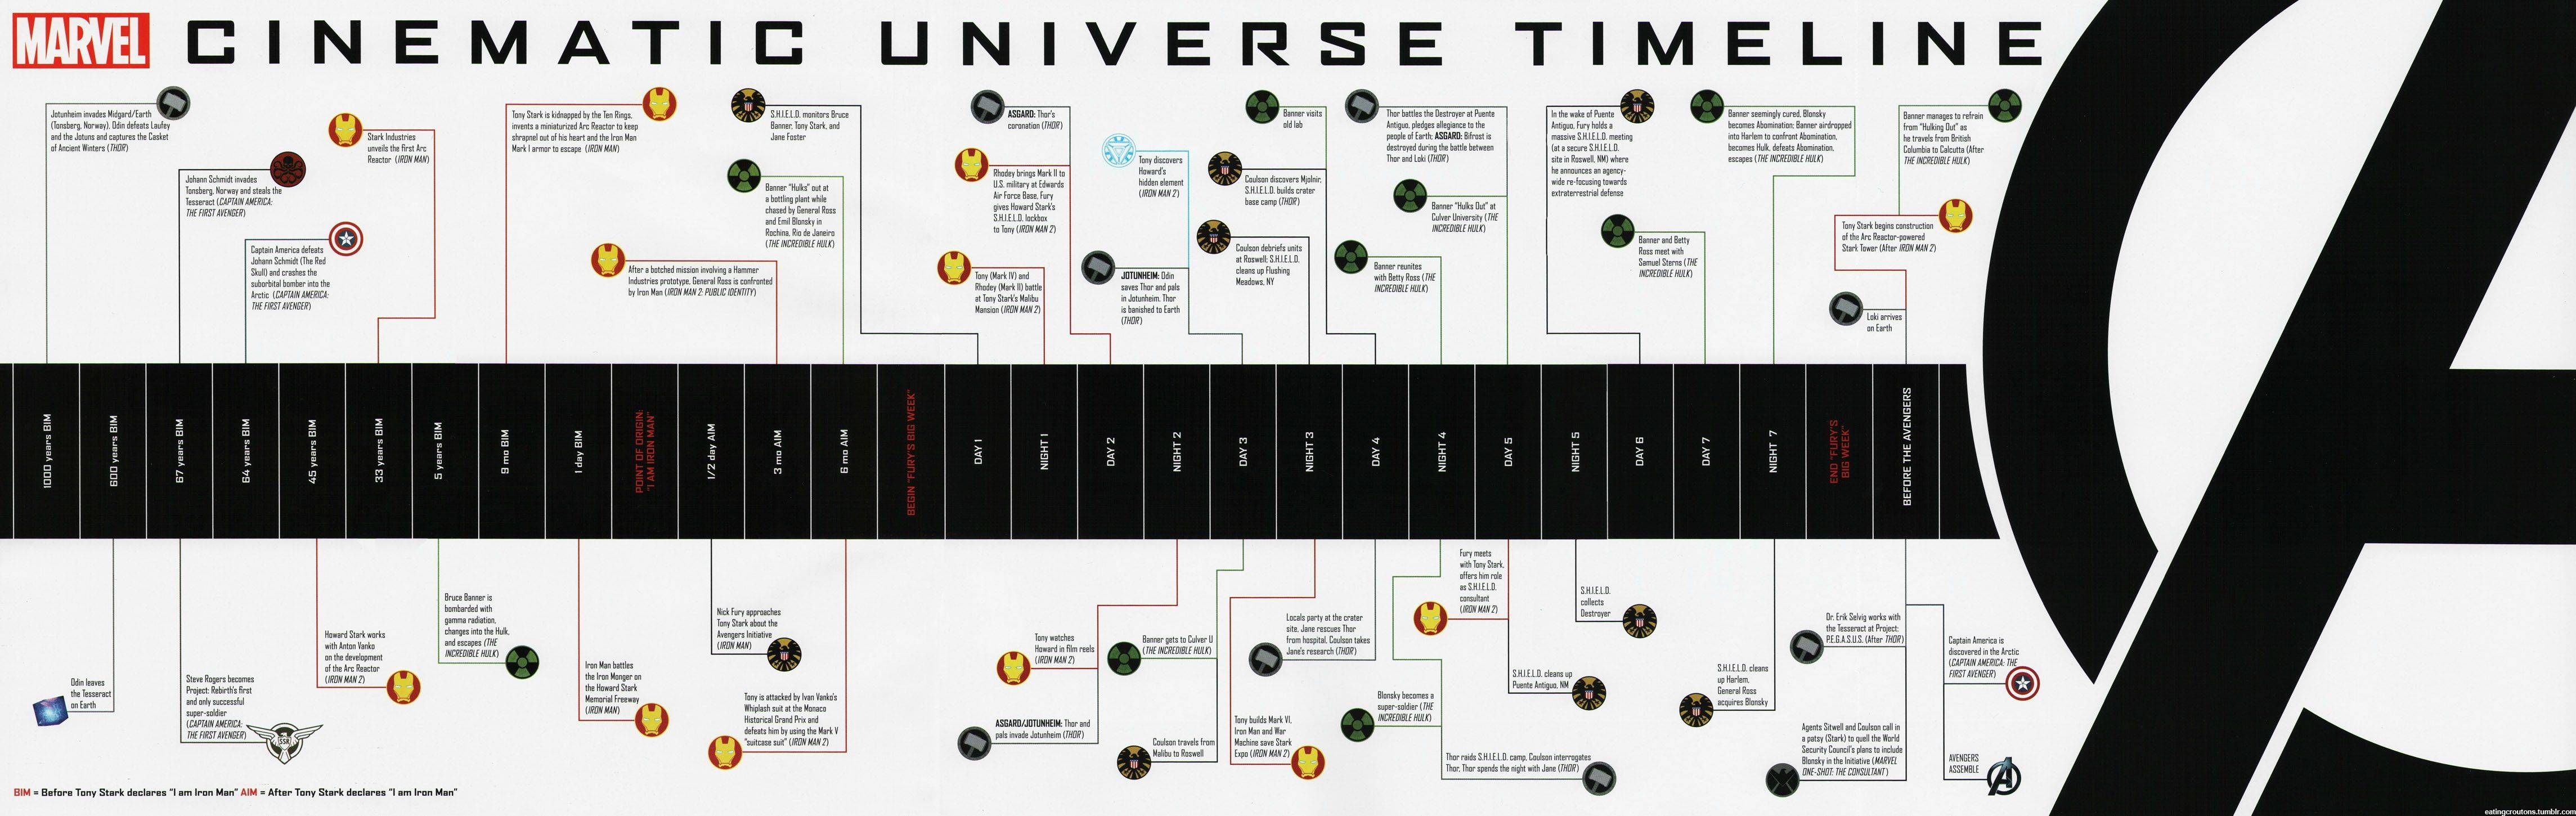 Marvel Movie Timeline Infographic